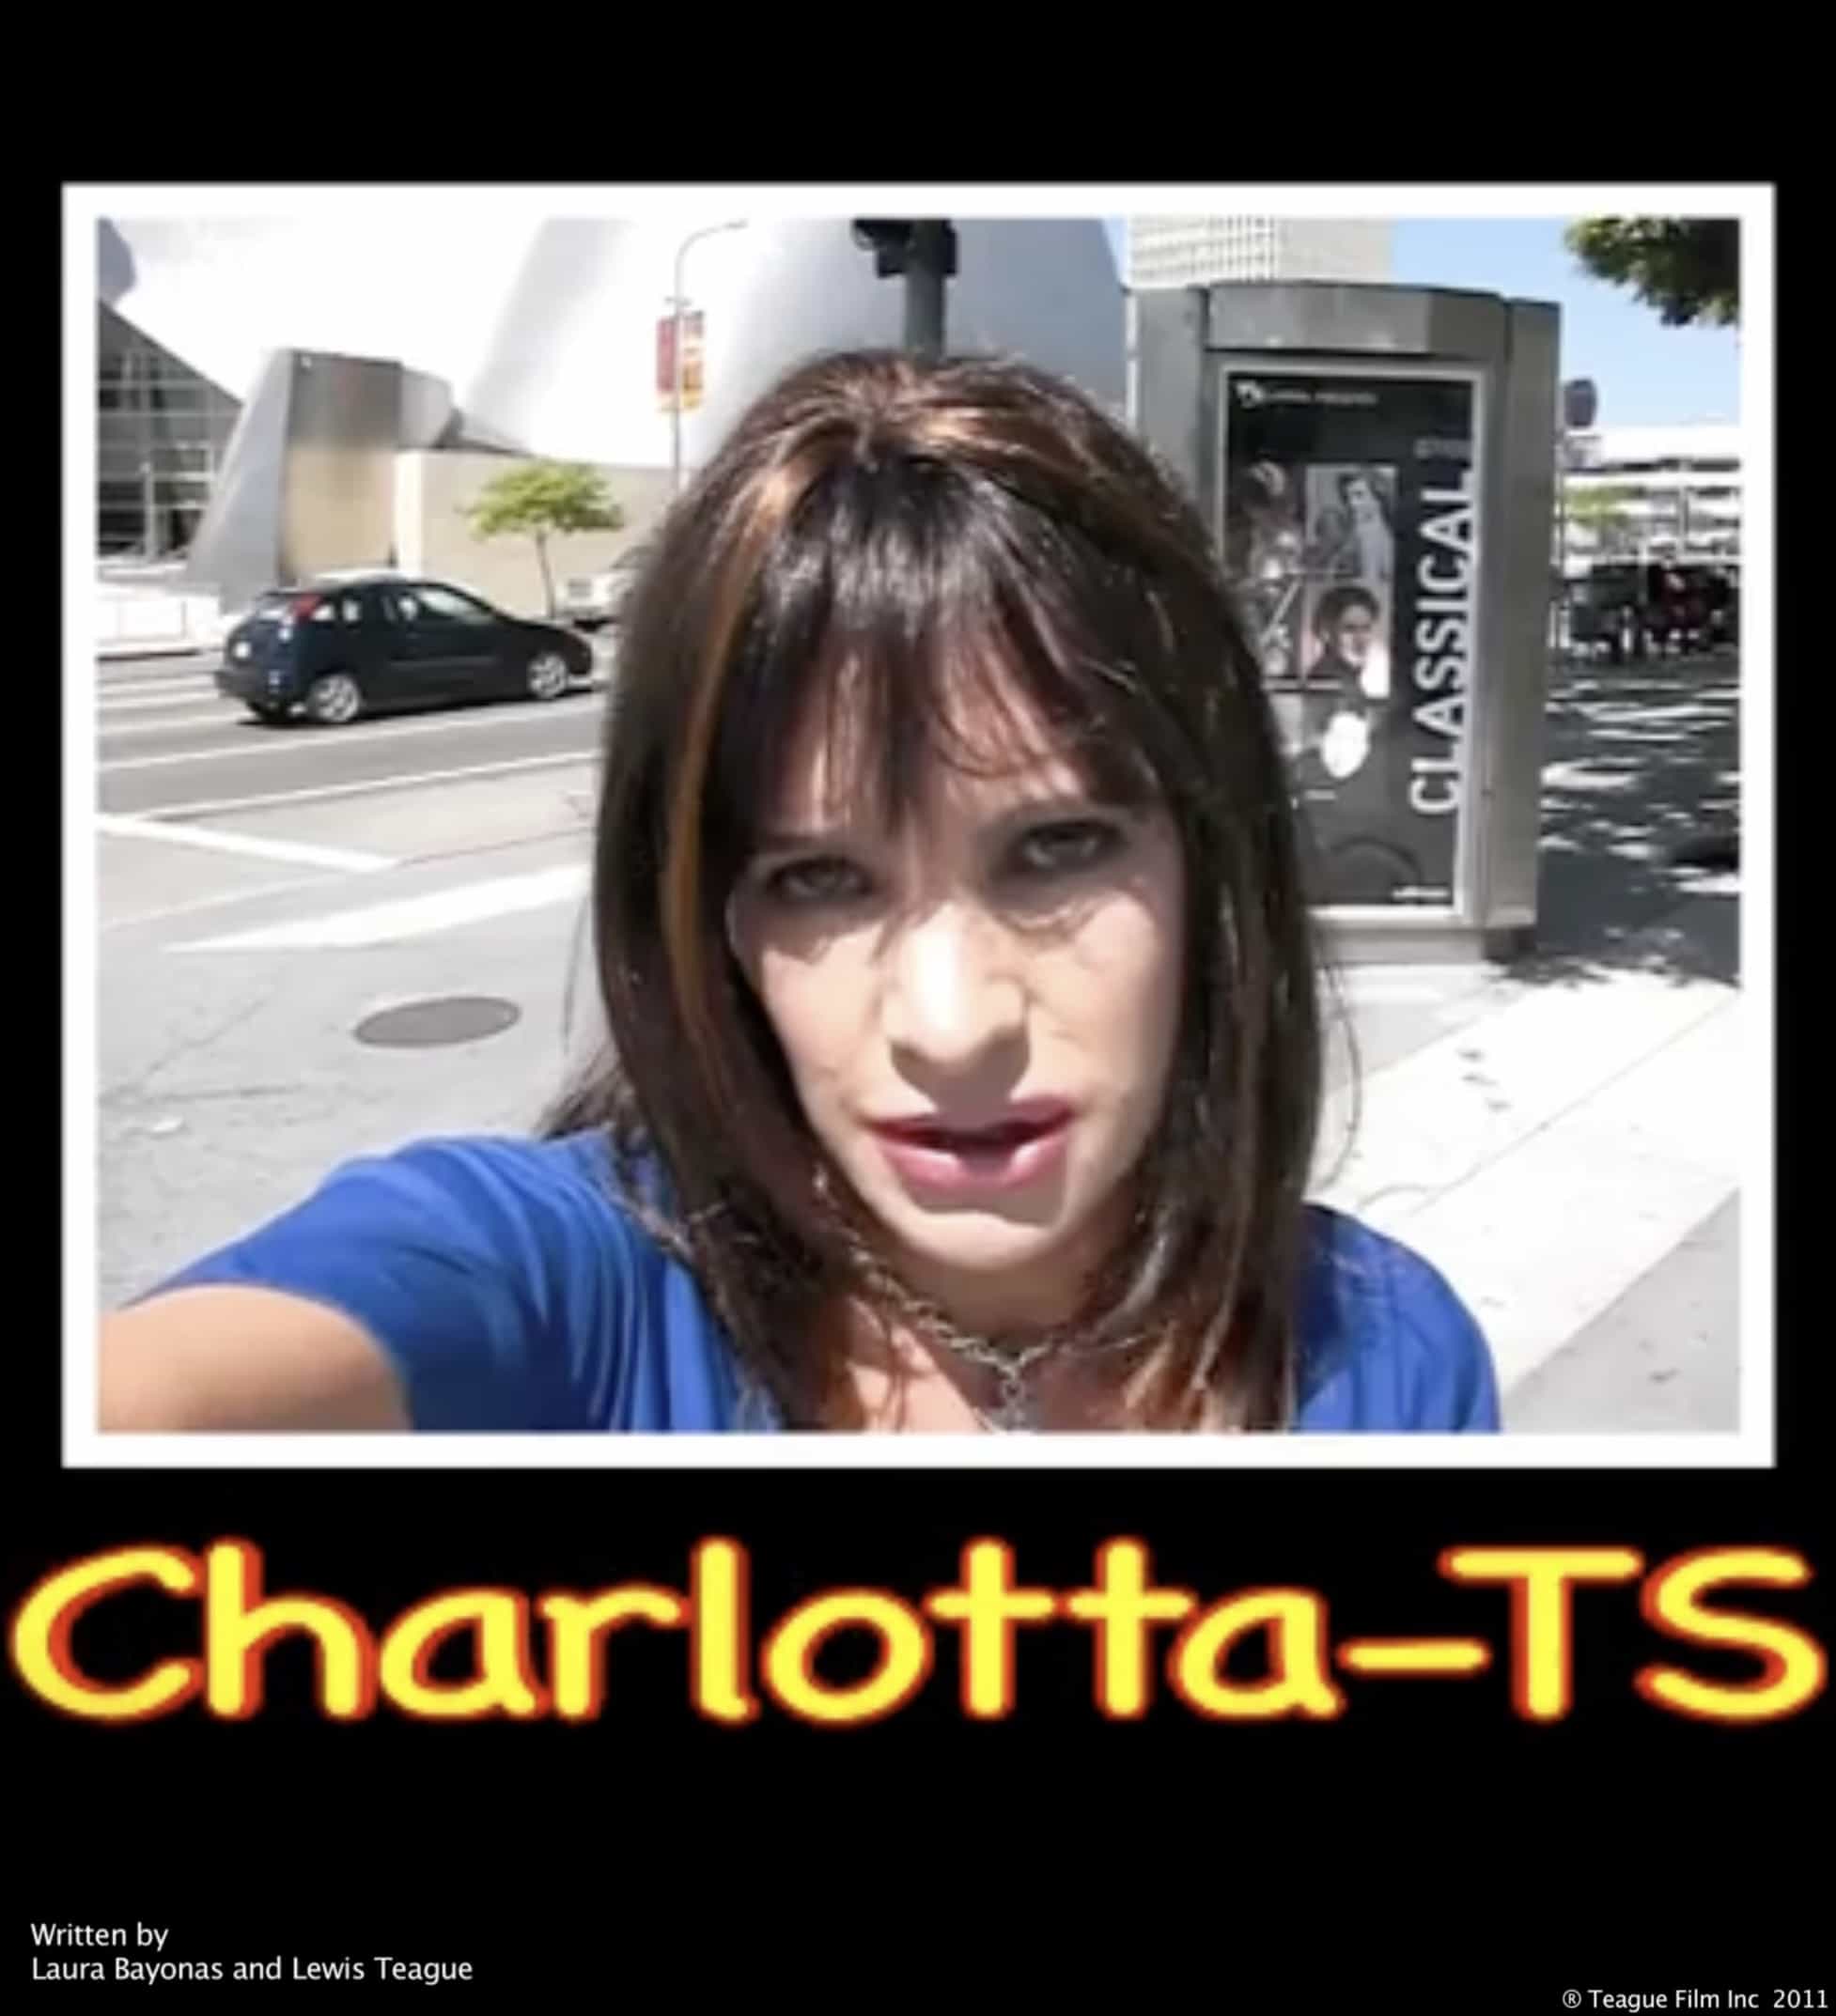 Charlotta-TS